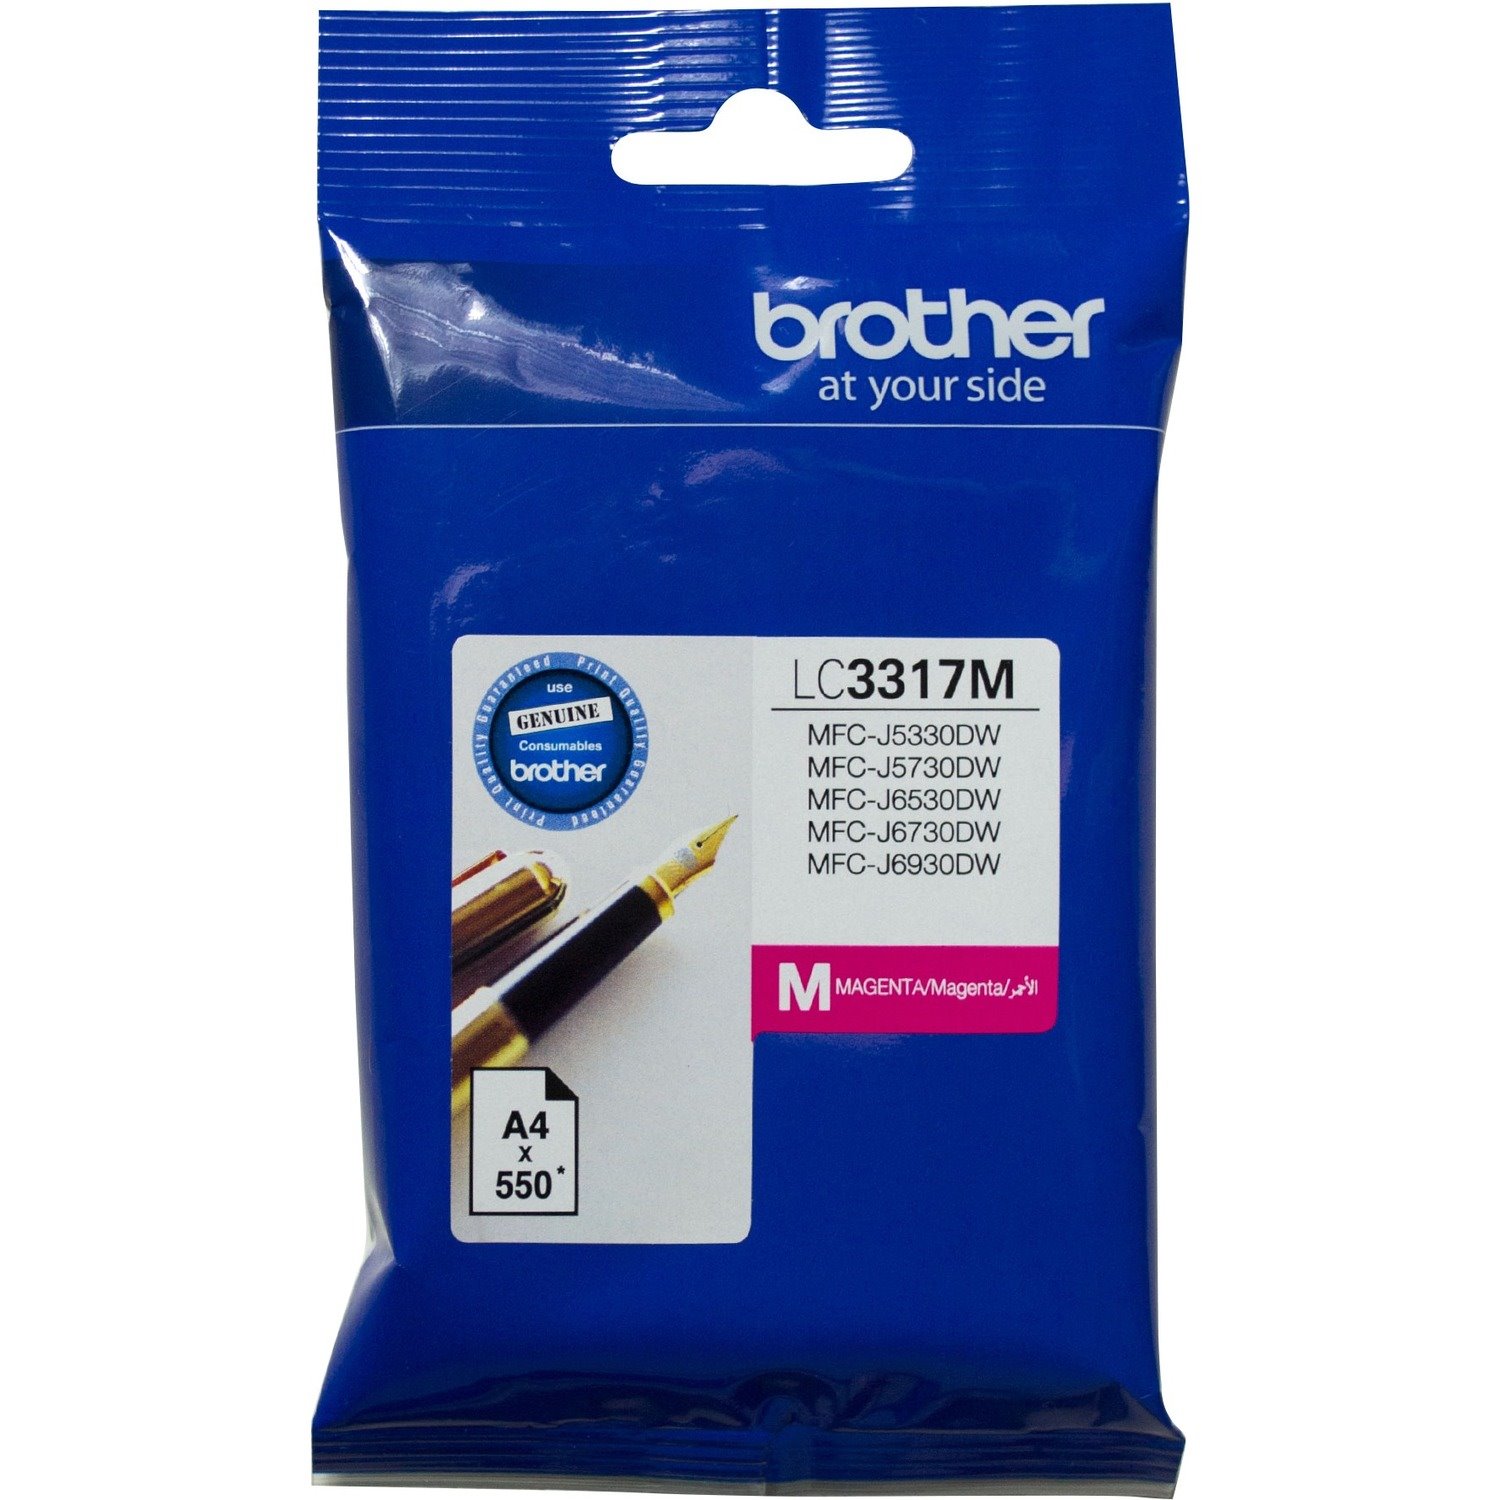 Brother LC3317M Original Standard Yield Inkjet Ink Cartridge - Magenta Pack